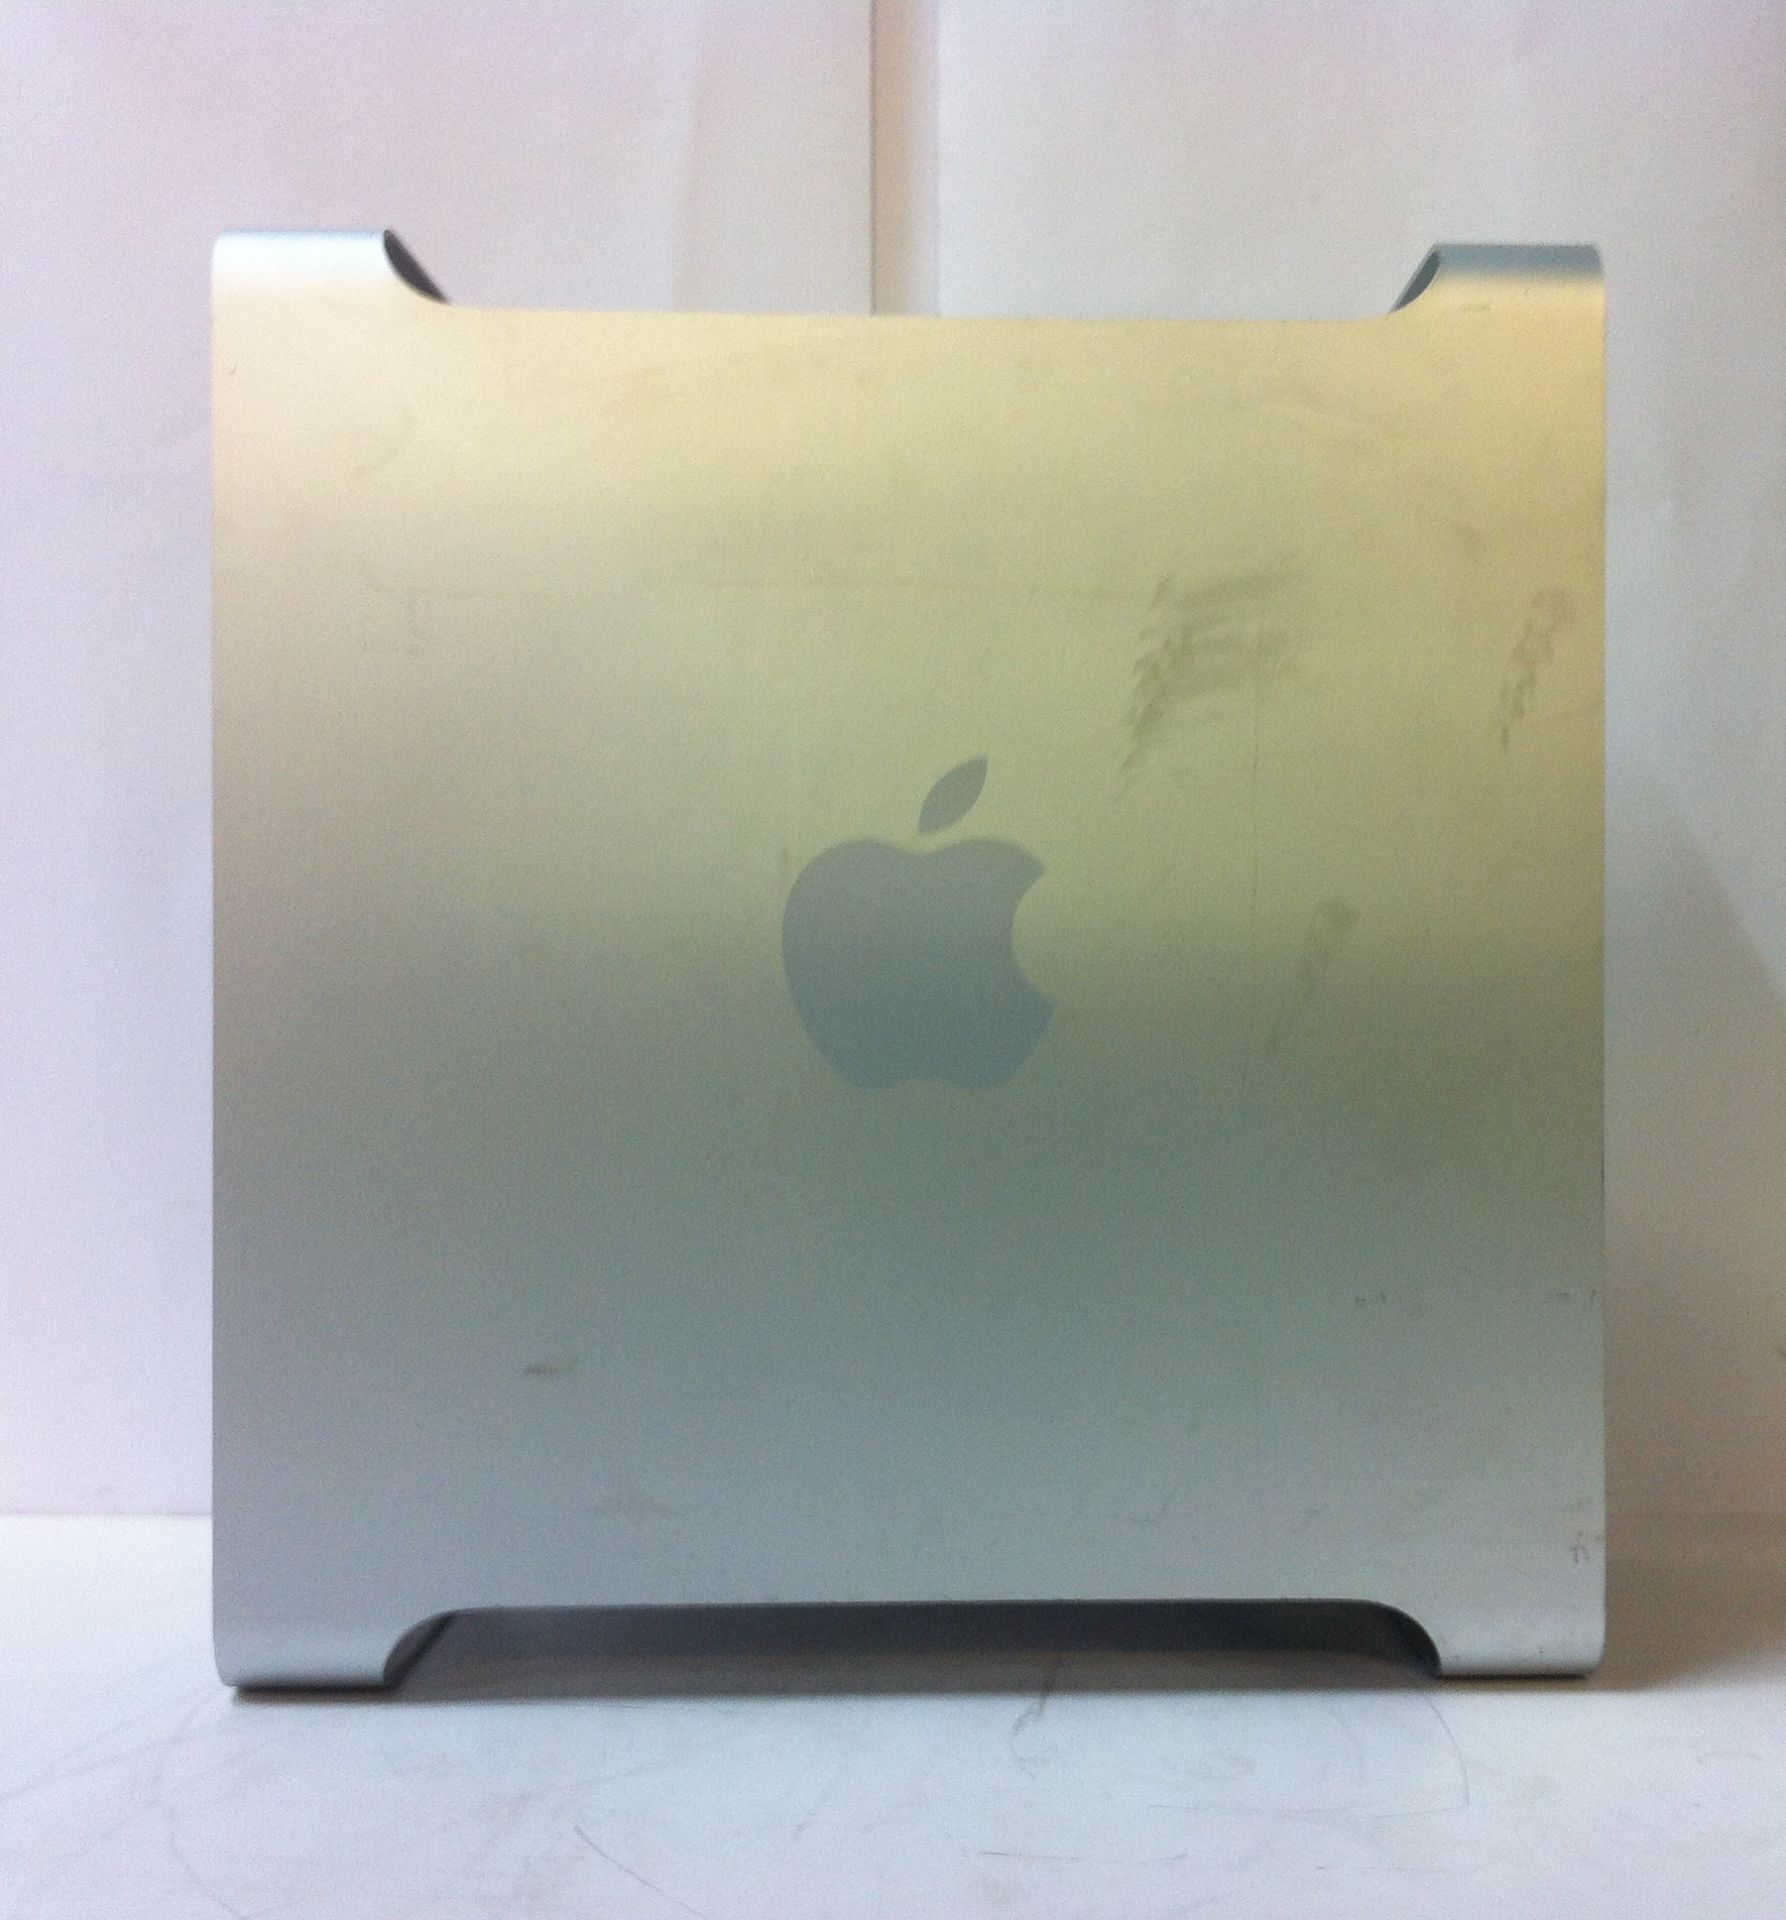 Apple MAC Desktop PC Tower - Image 2 of 3